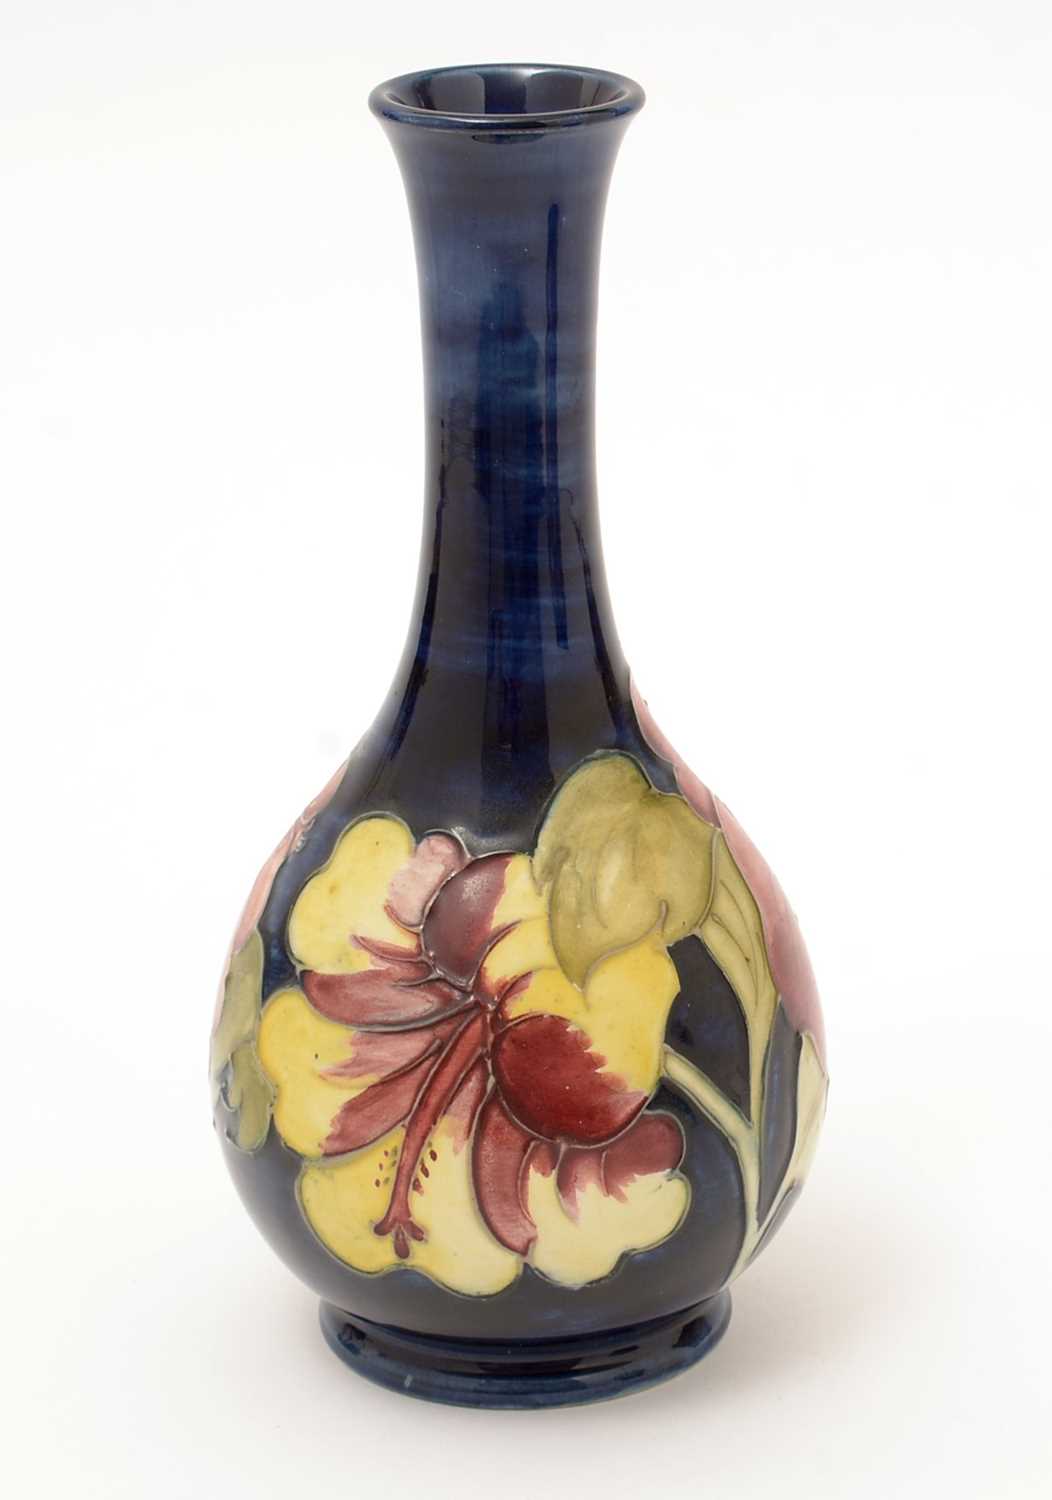 Lot 455 - A Moorcroft Hibiscus pattern bottle vase.